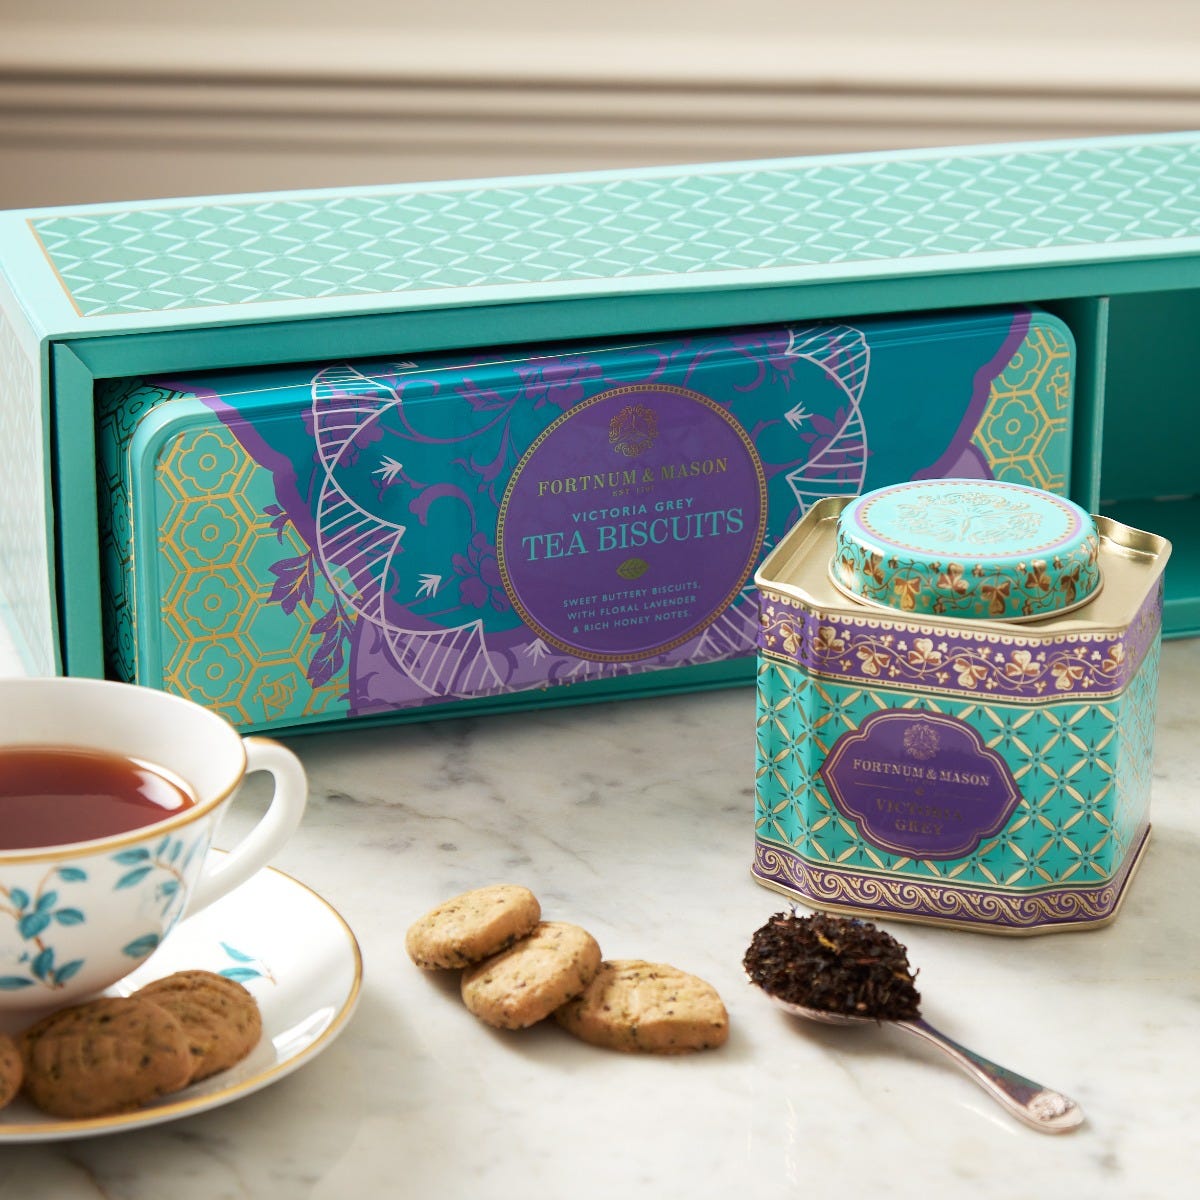 Victoria Grey Black Tea and Biscuits Gift Set, Fortnum & Mason